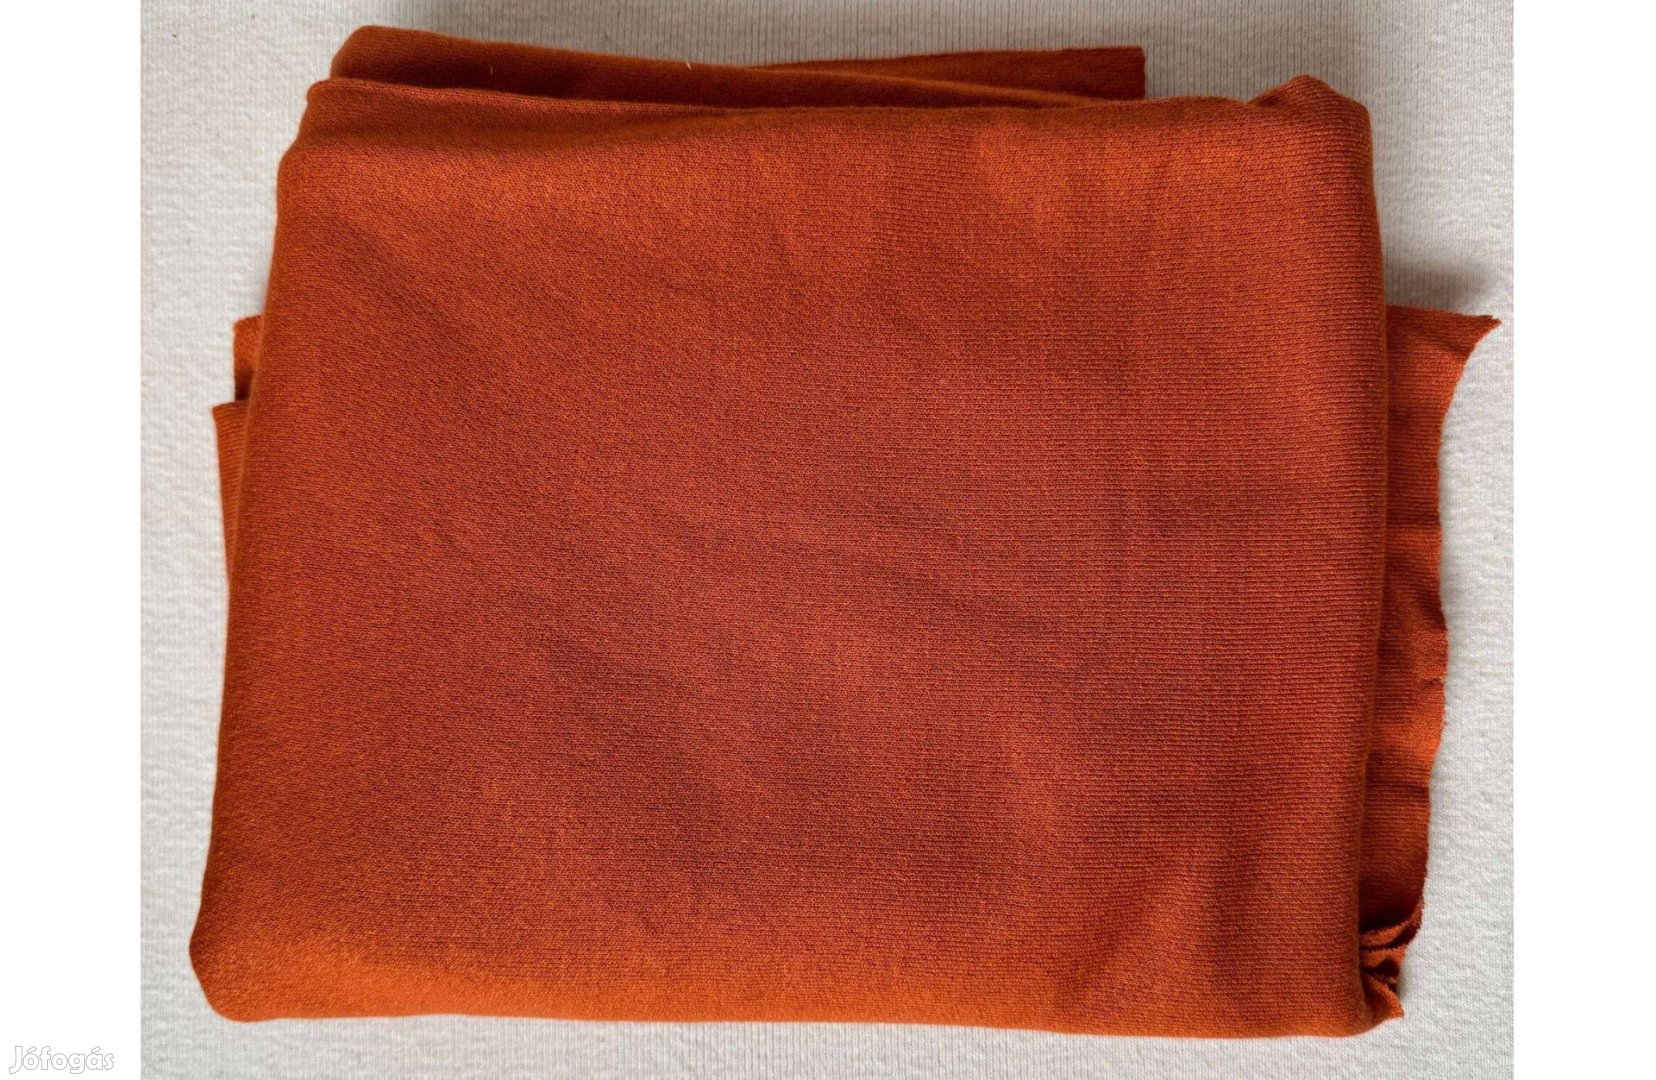 Méteráru textil (dzsörzé) rozsdabarna 5 db